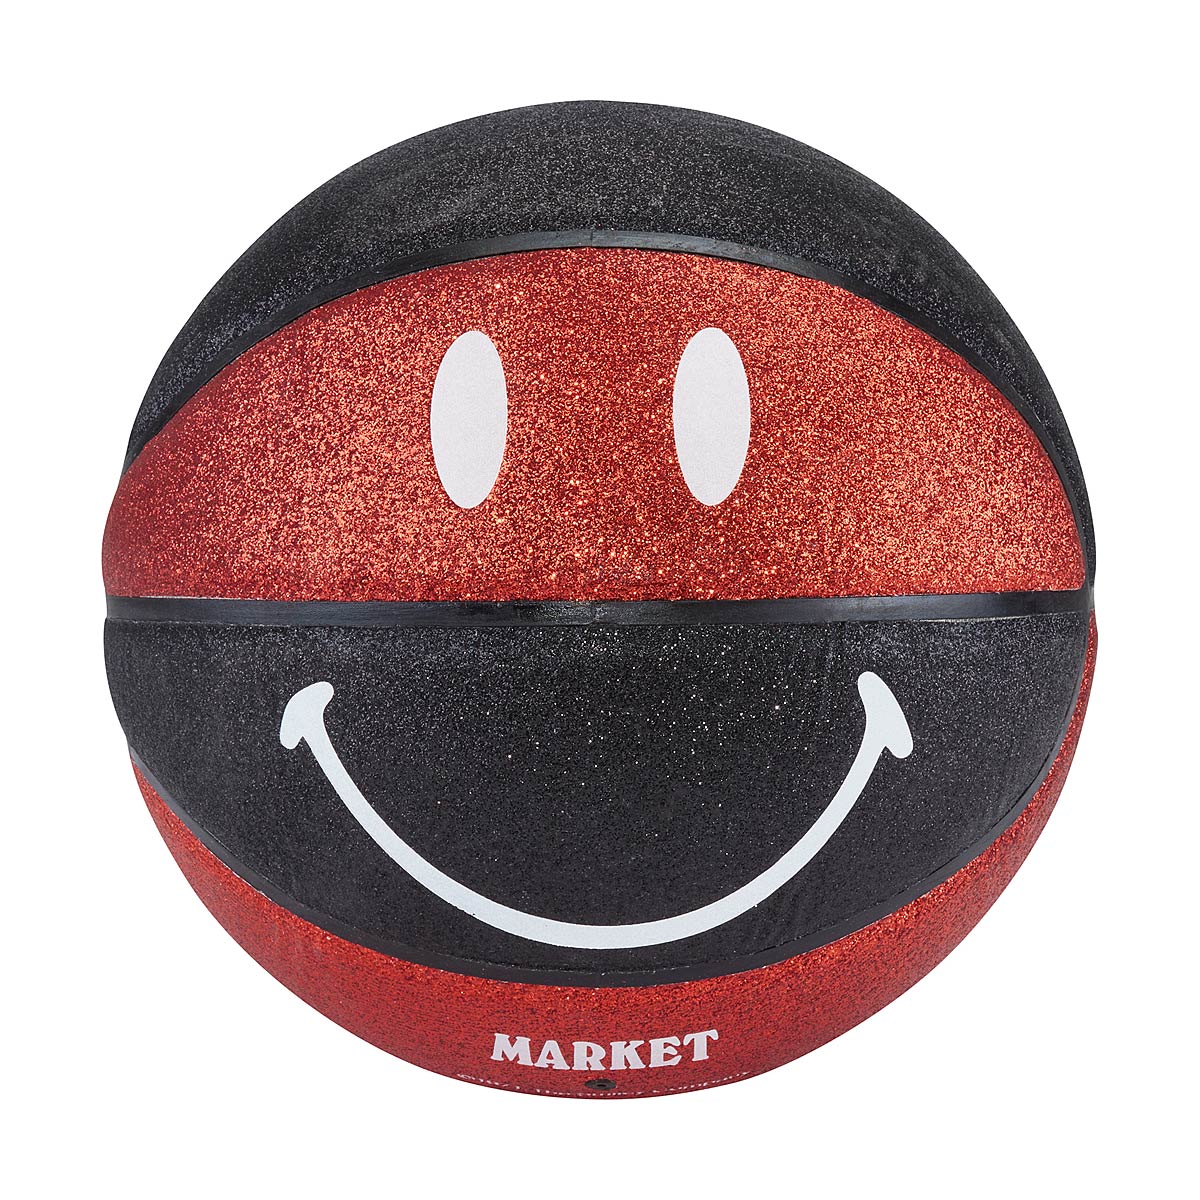 Market Smiley Glitter Windy City Basketball, Multi